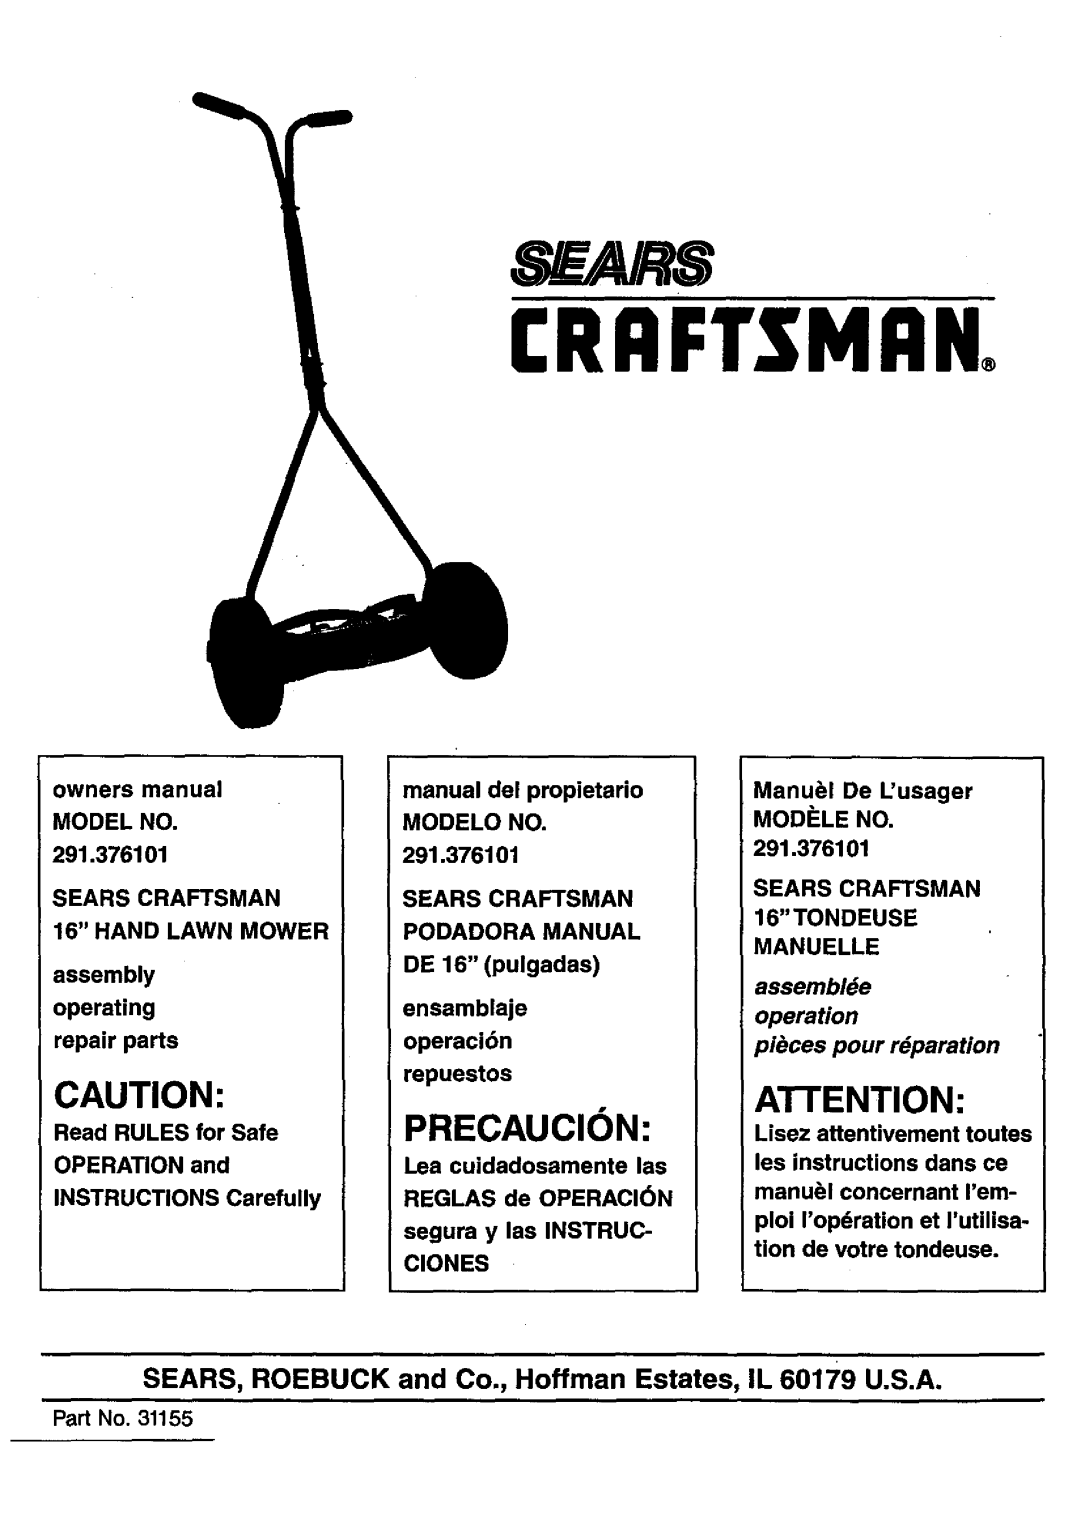 Craftsman 291.376101 owner manual AI-rENTION, Precaucion, Manu l De Lusager, MODi LE NO, Crrftsmrn, 8 A/R8, assemblde 